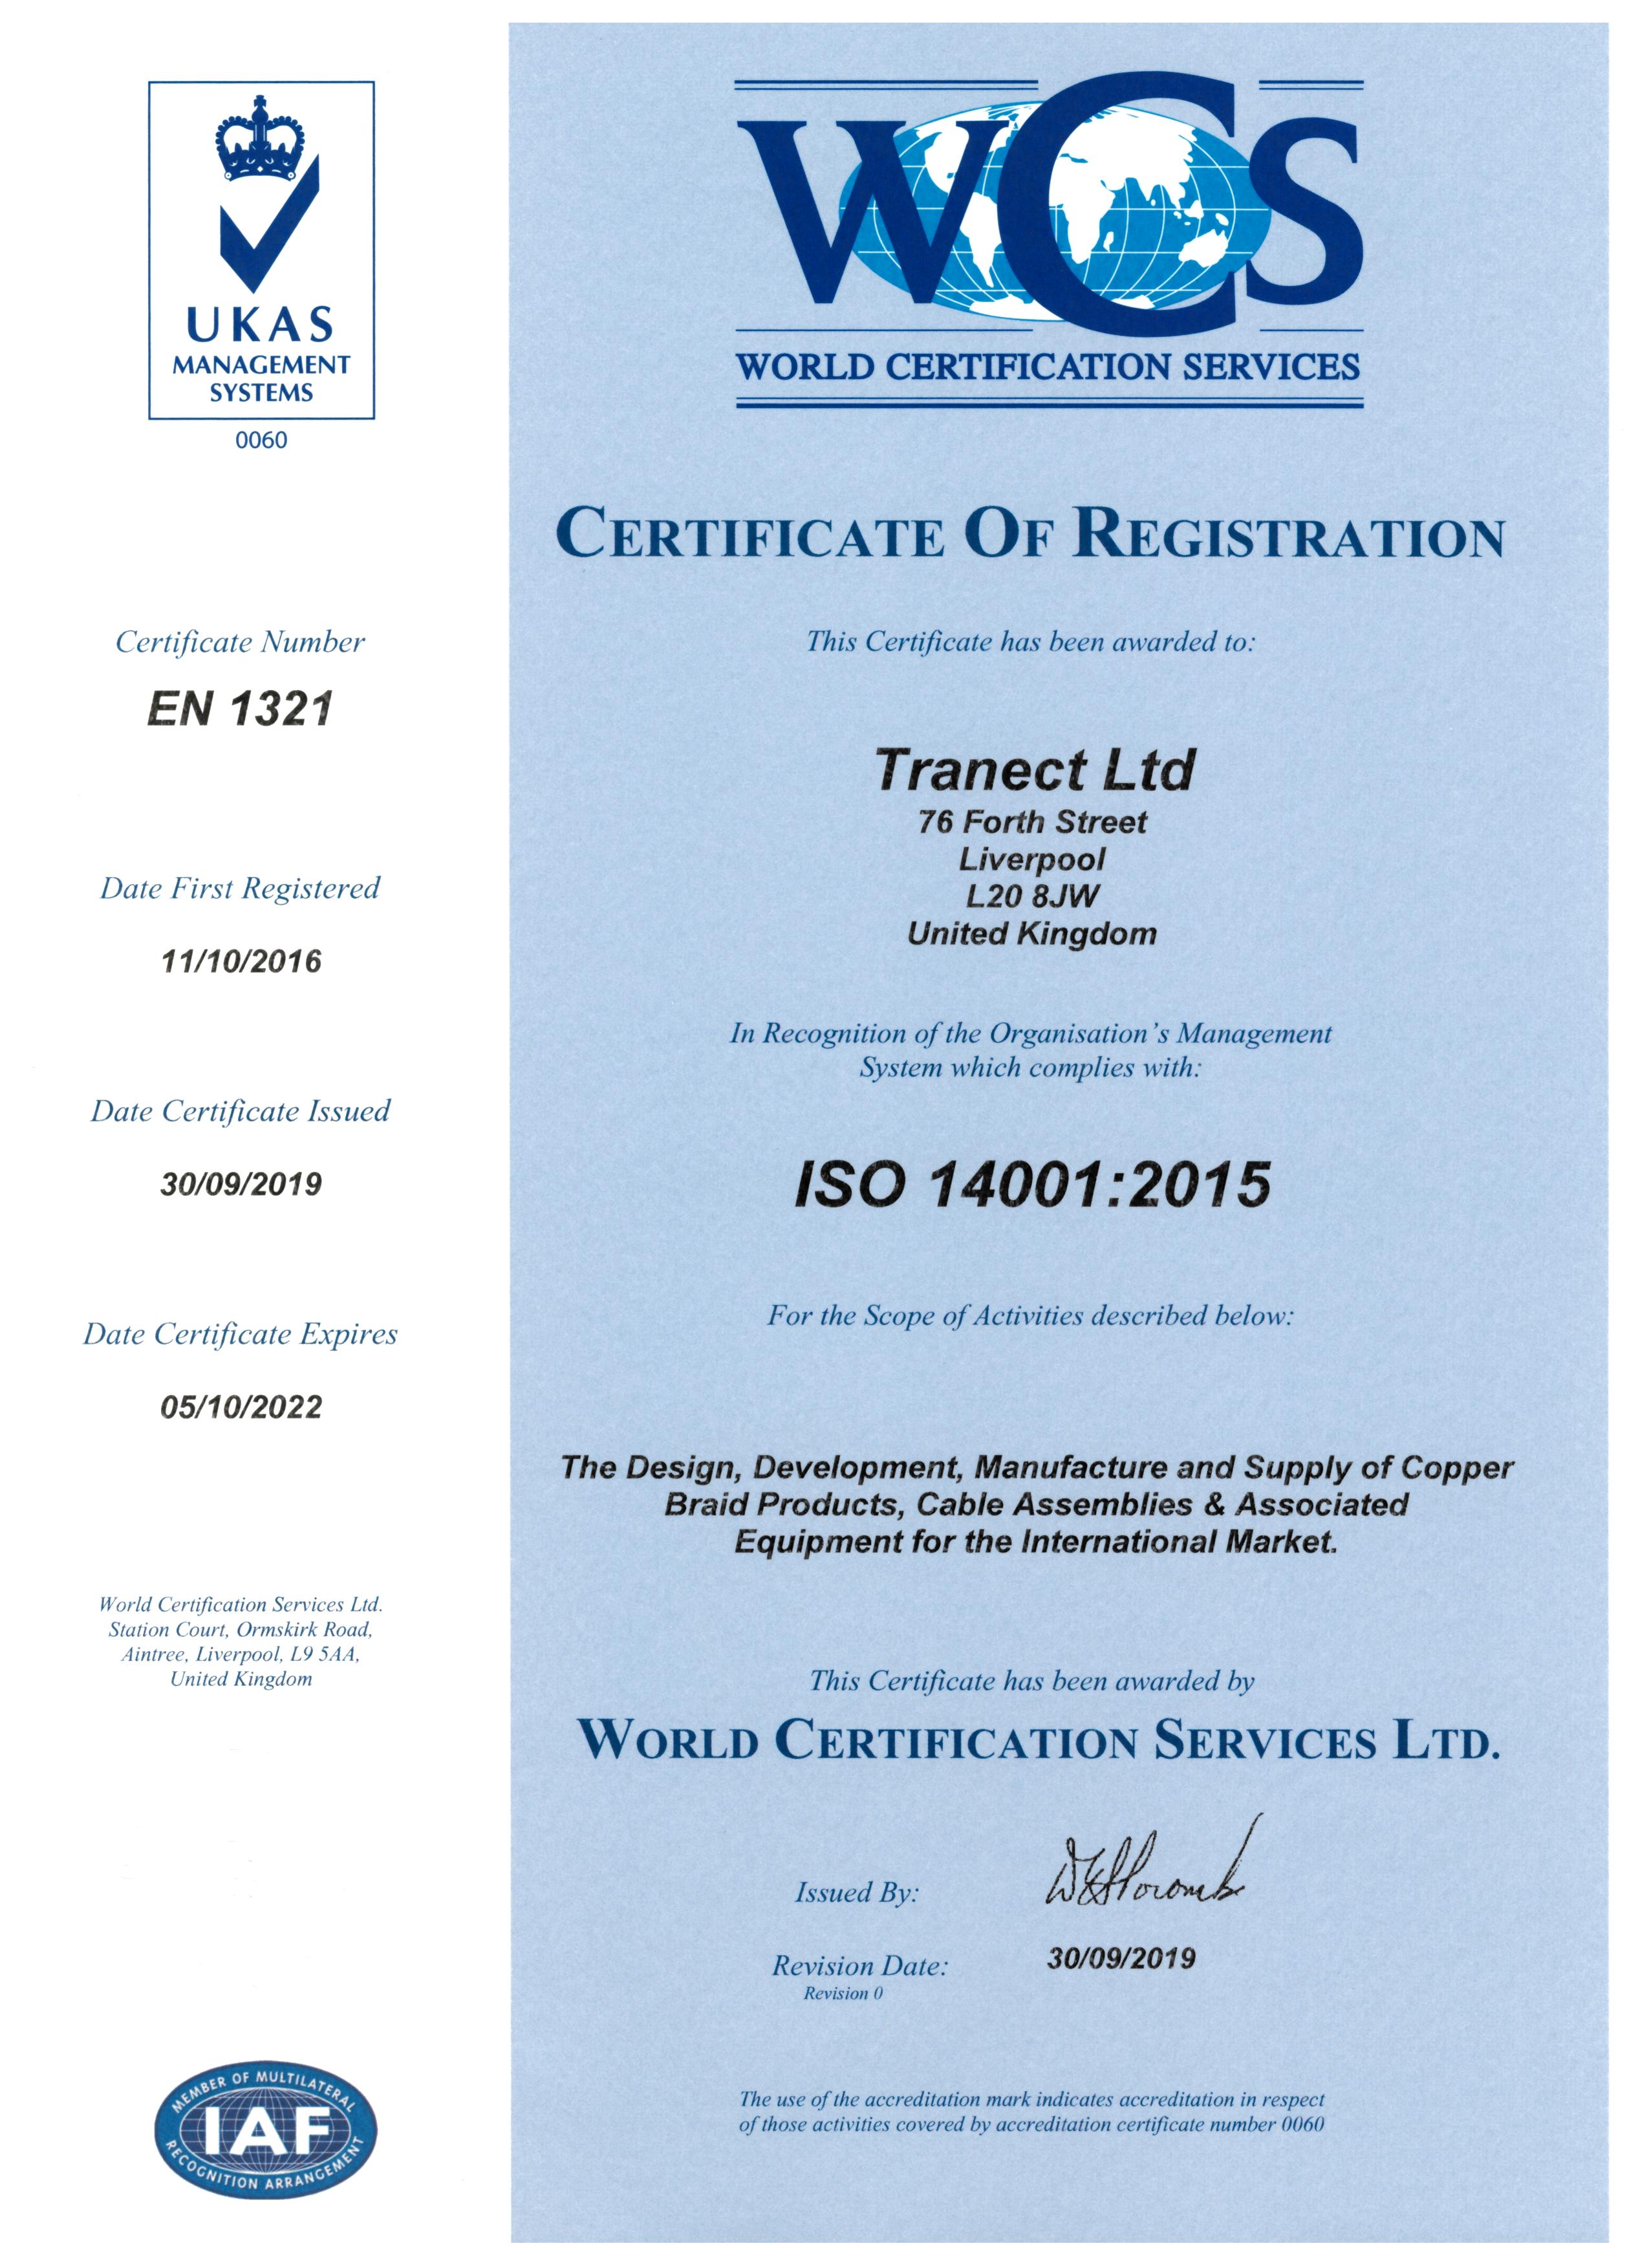 ISO 14001:2015 Environmental Certificate